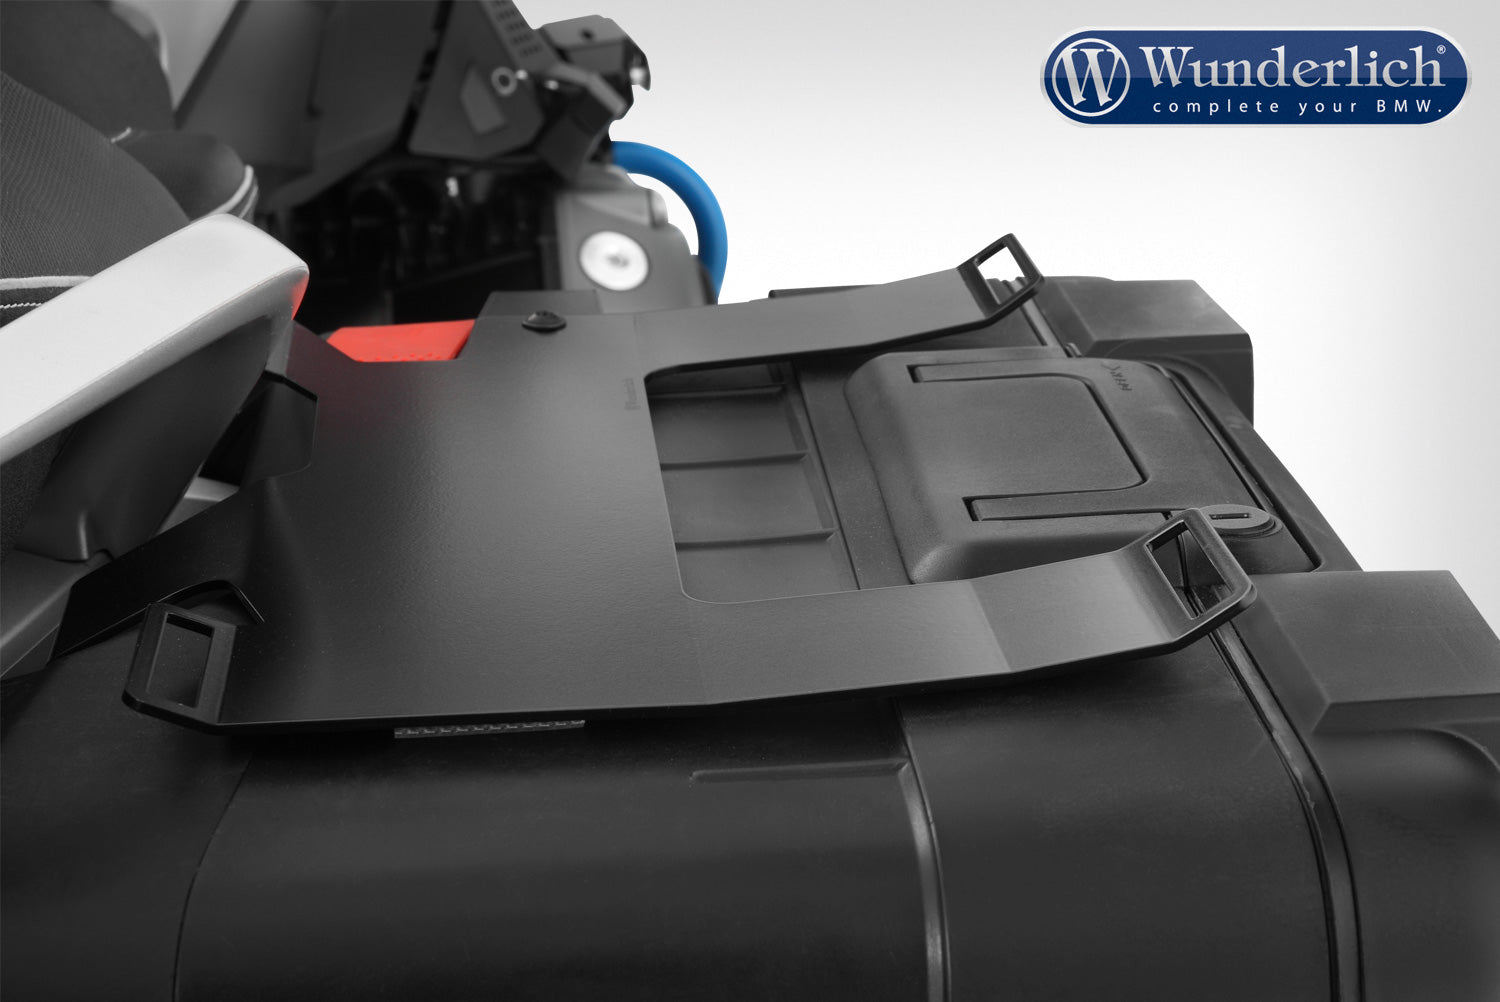 Wunderlich Luggage rails for original Vario case R 1200/1250 GS LC - Set - black